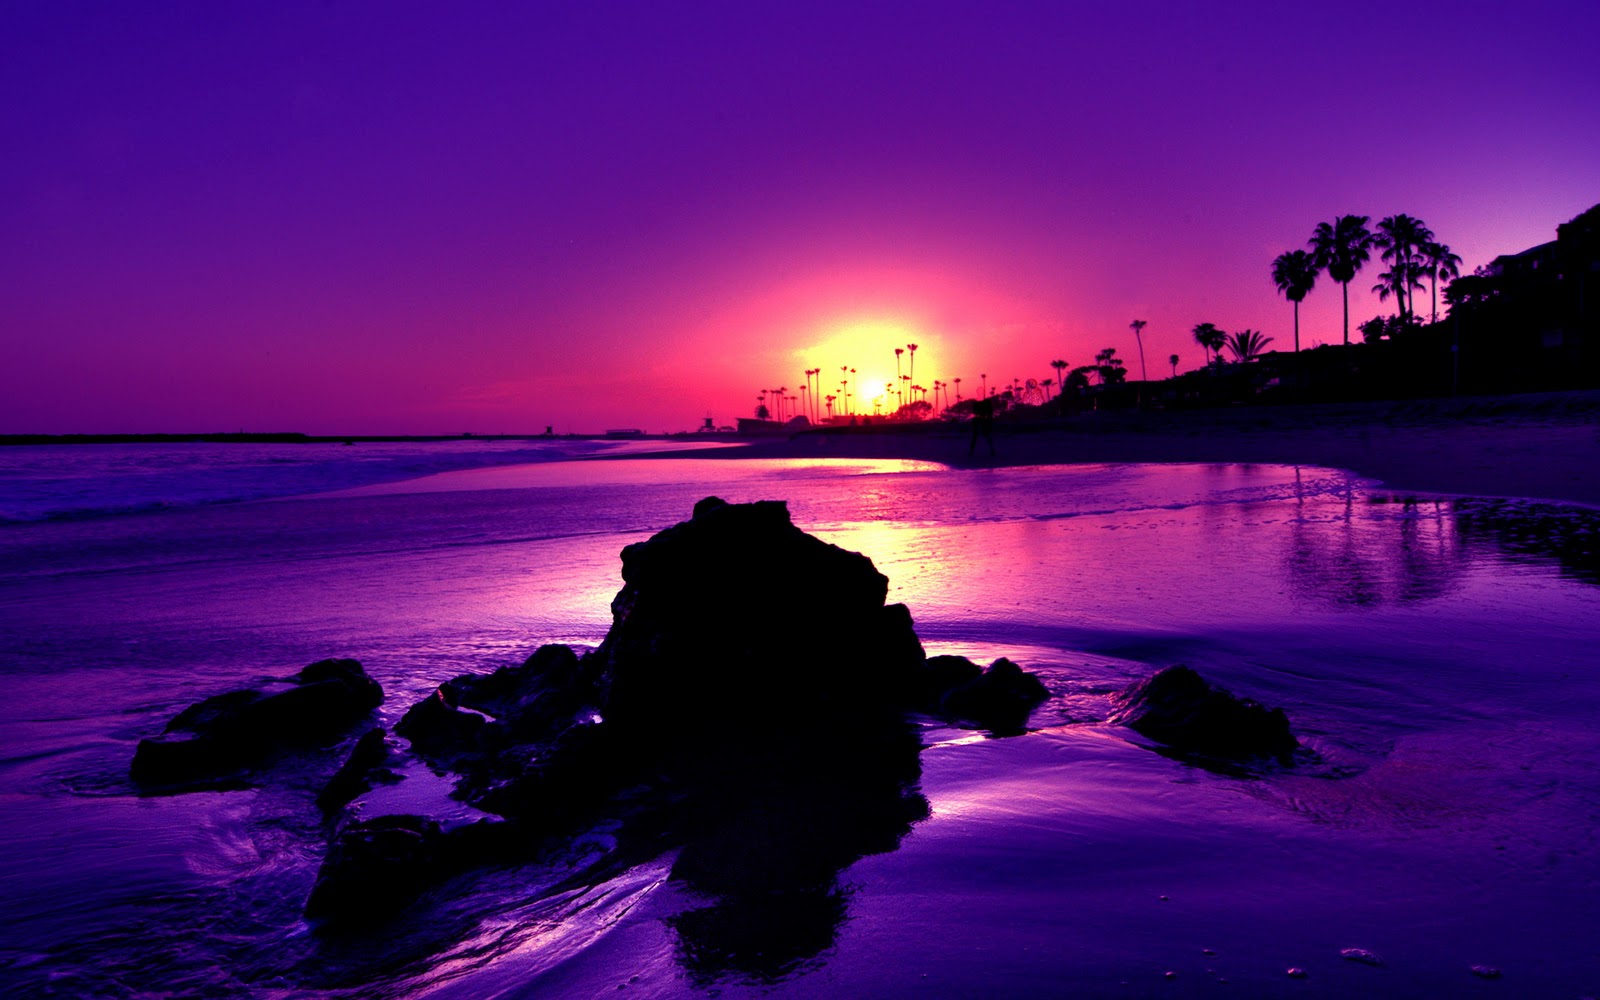 Beautiful Beach Sunset Wallpaper HD In